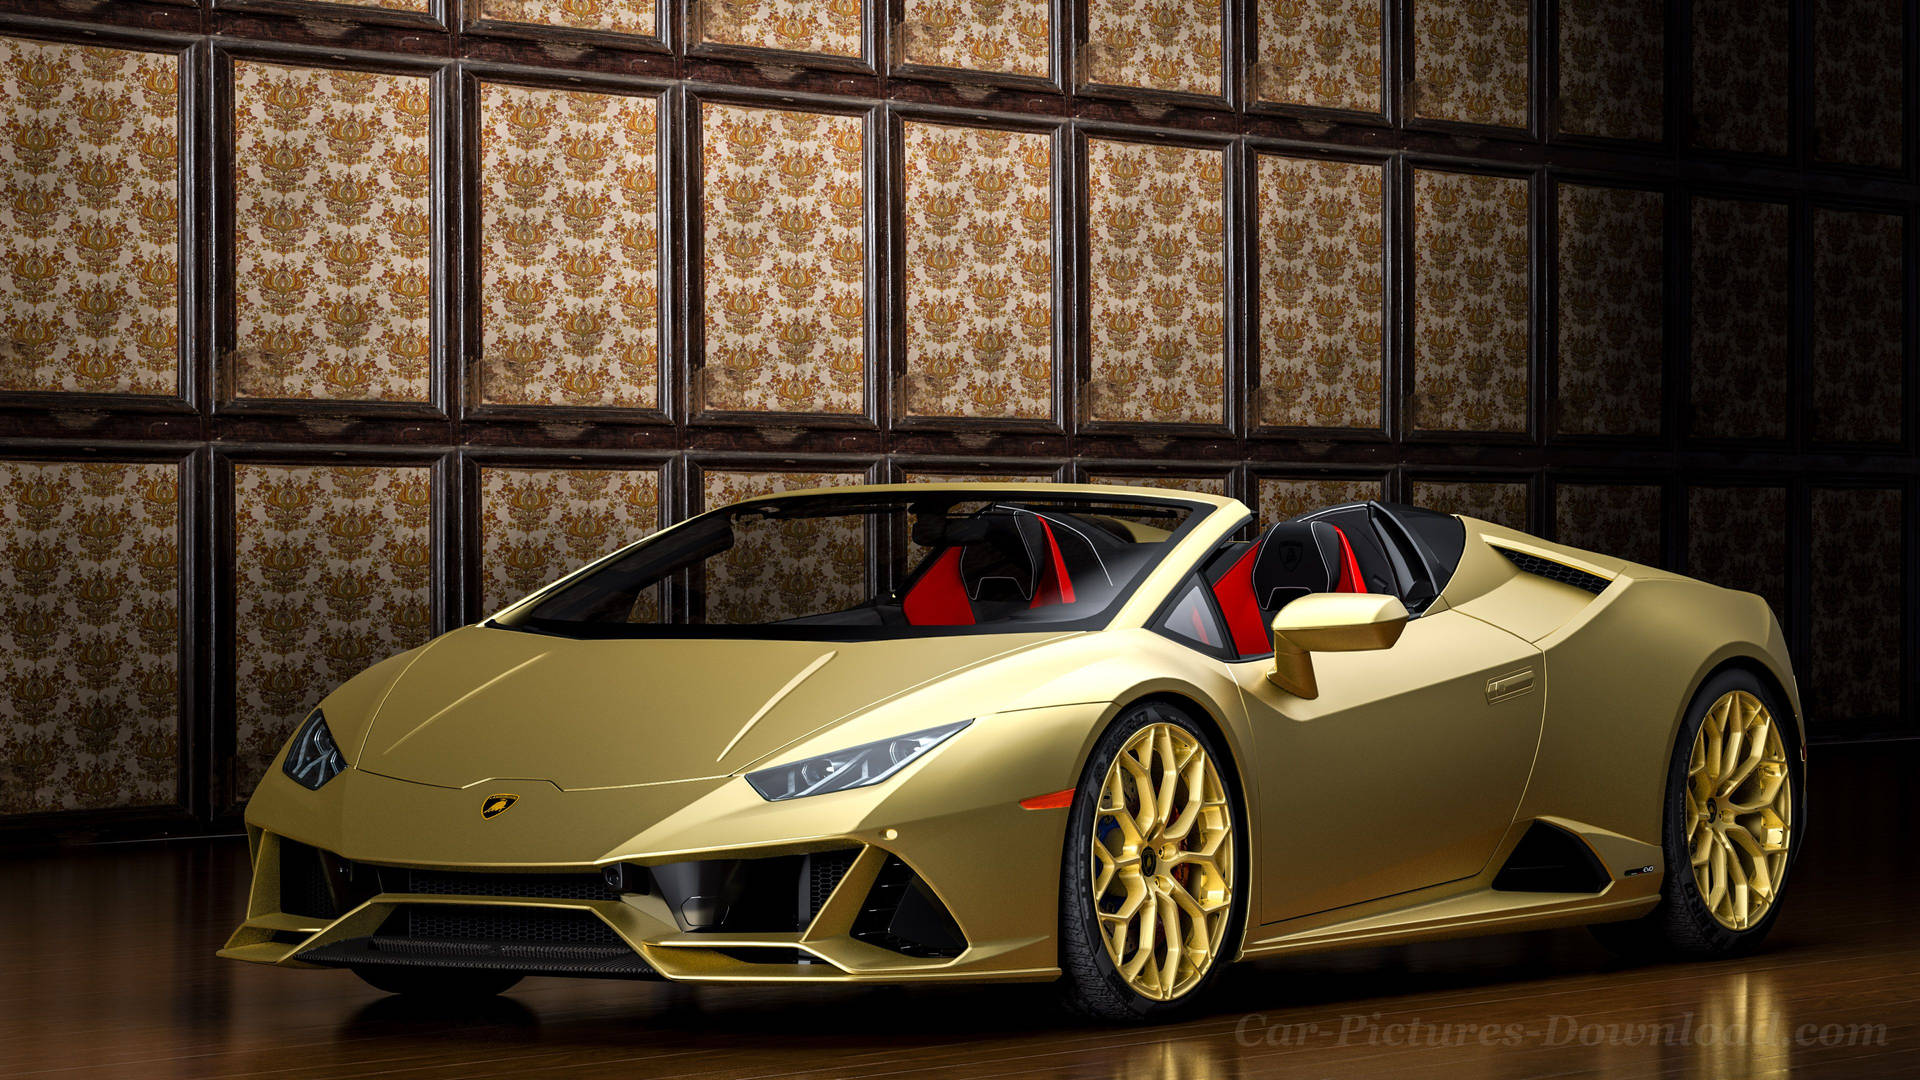 Cool Cars Feature: Golden Matte Lamborghini Wallpaper